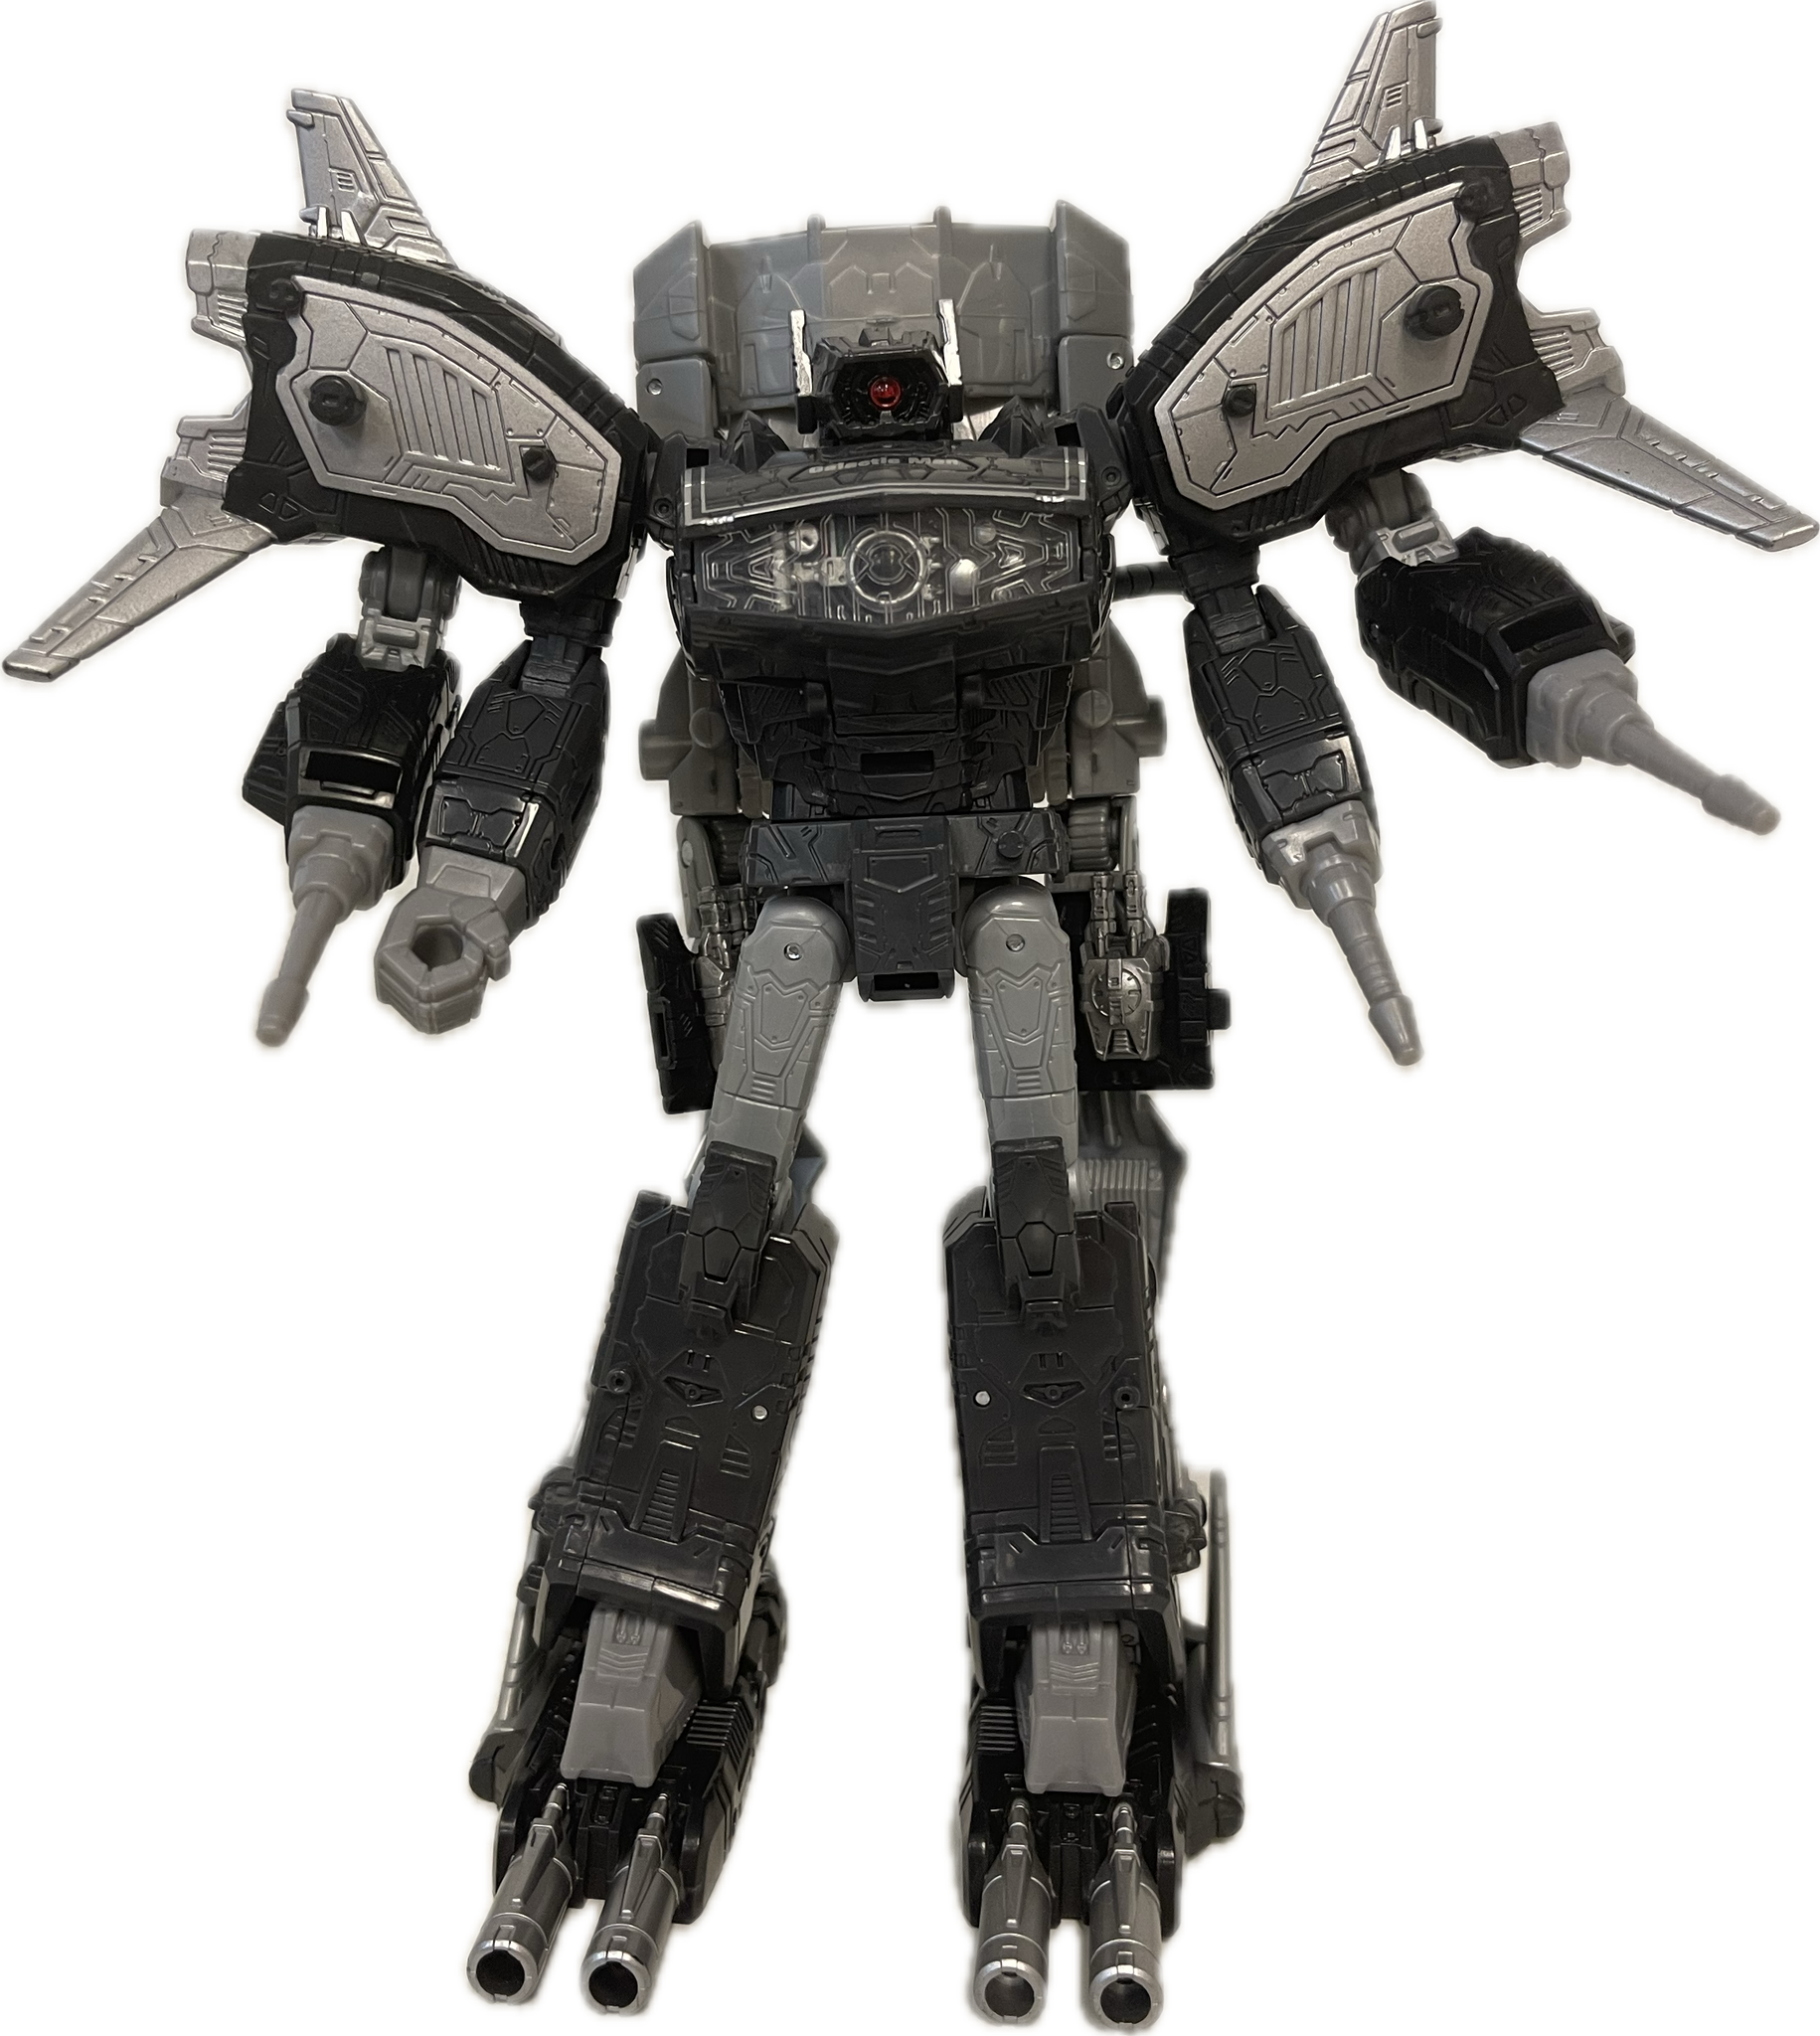 Transformers WFC: Siege Select "Galactic Man" Shockwave